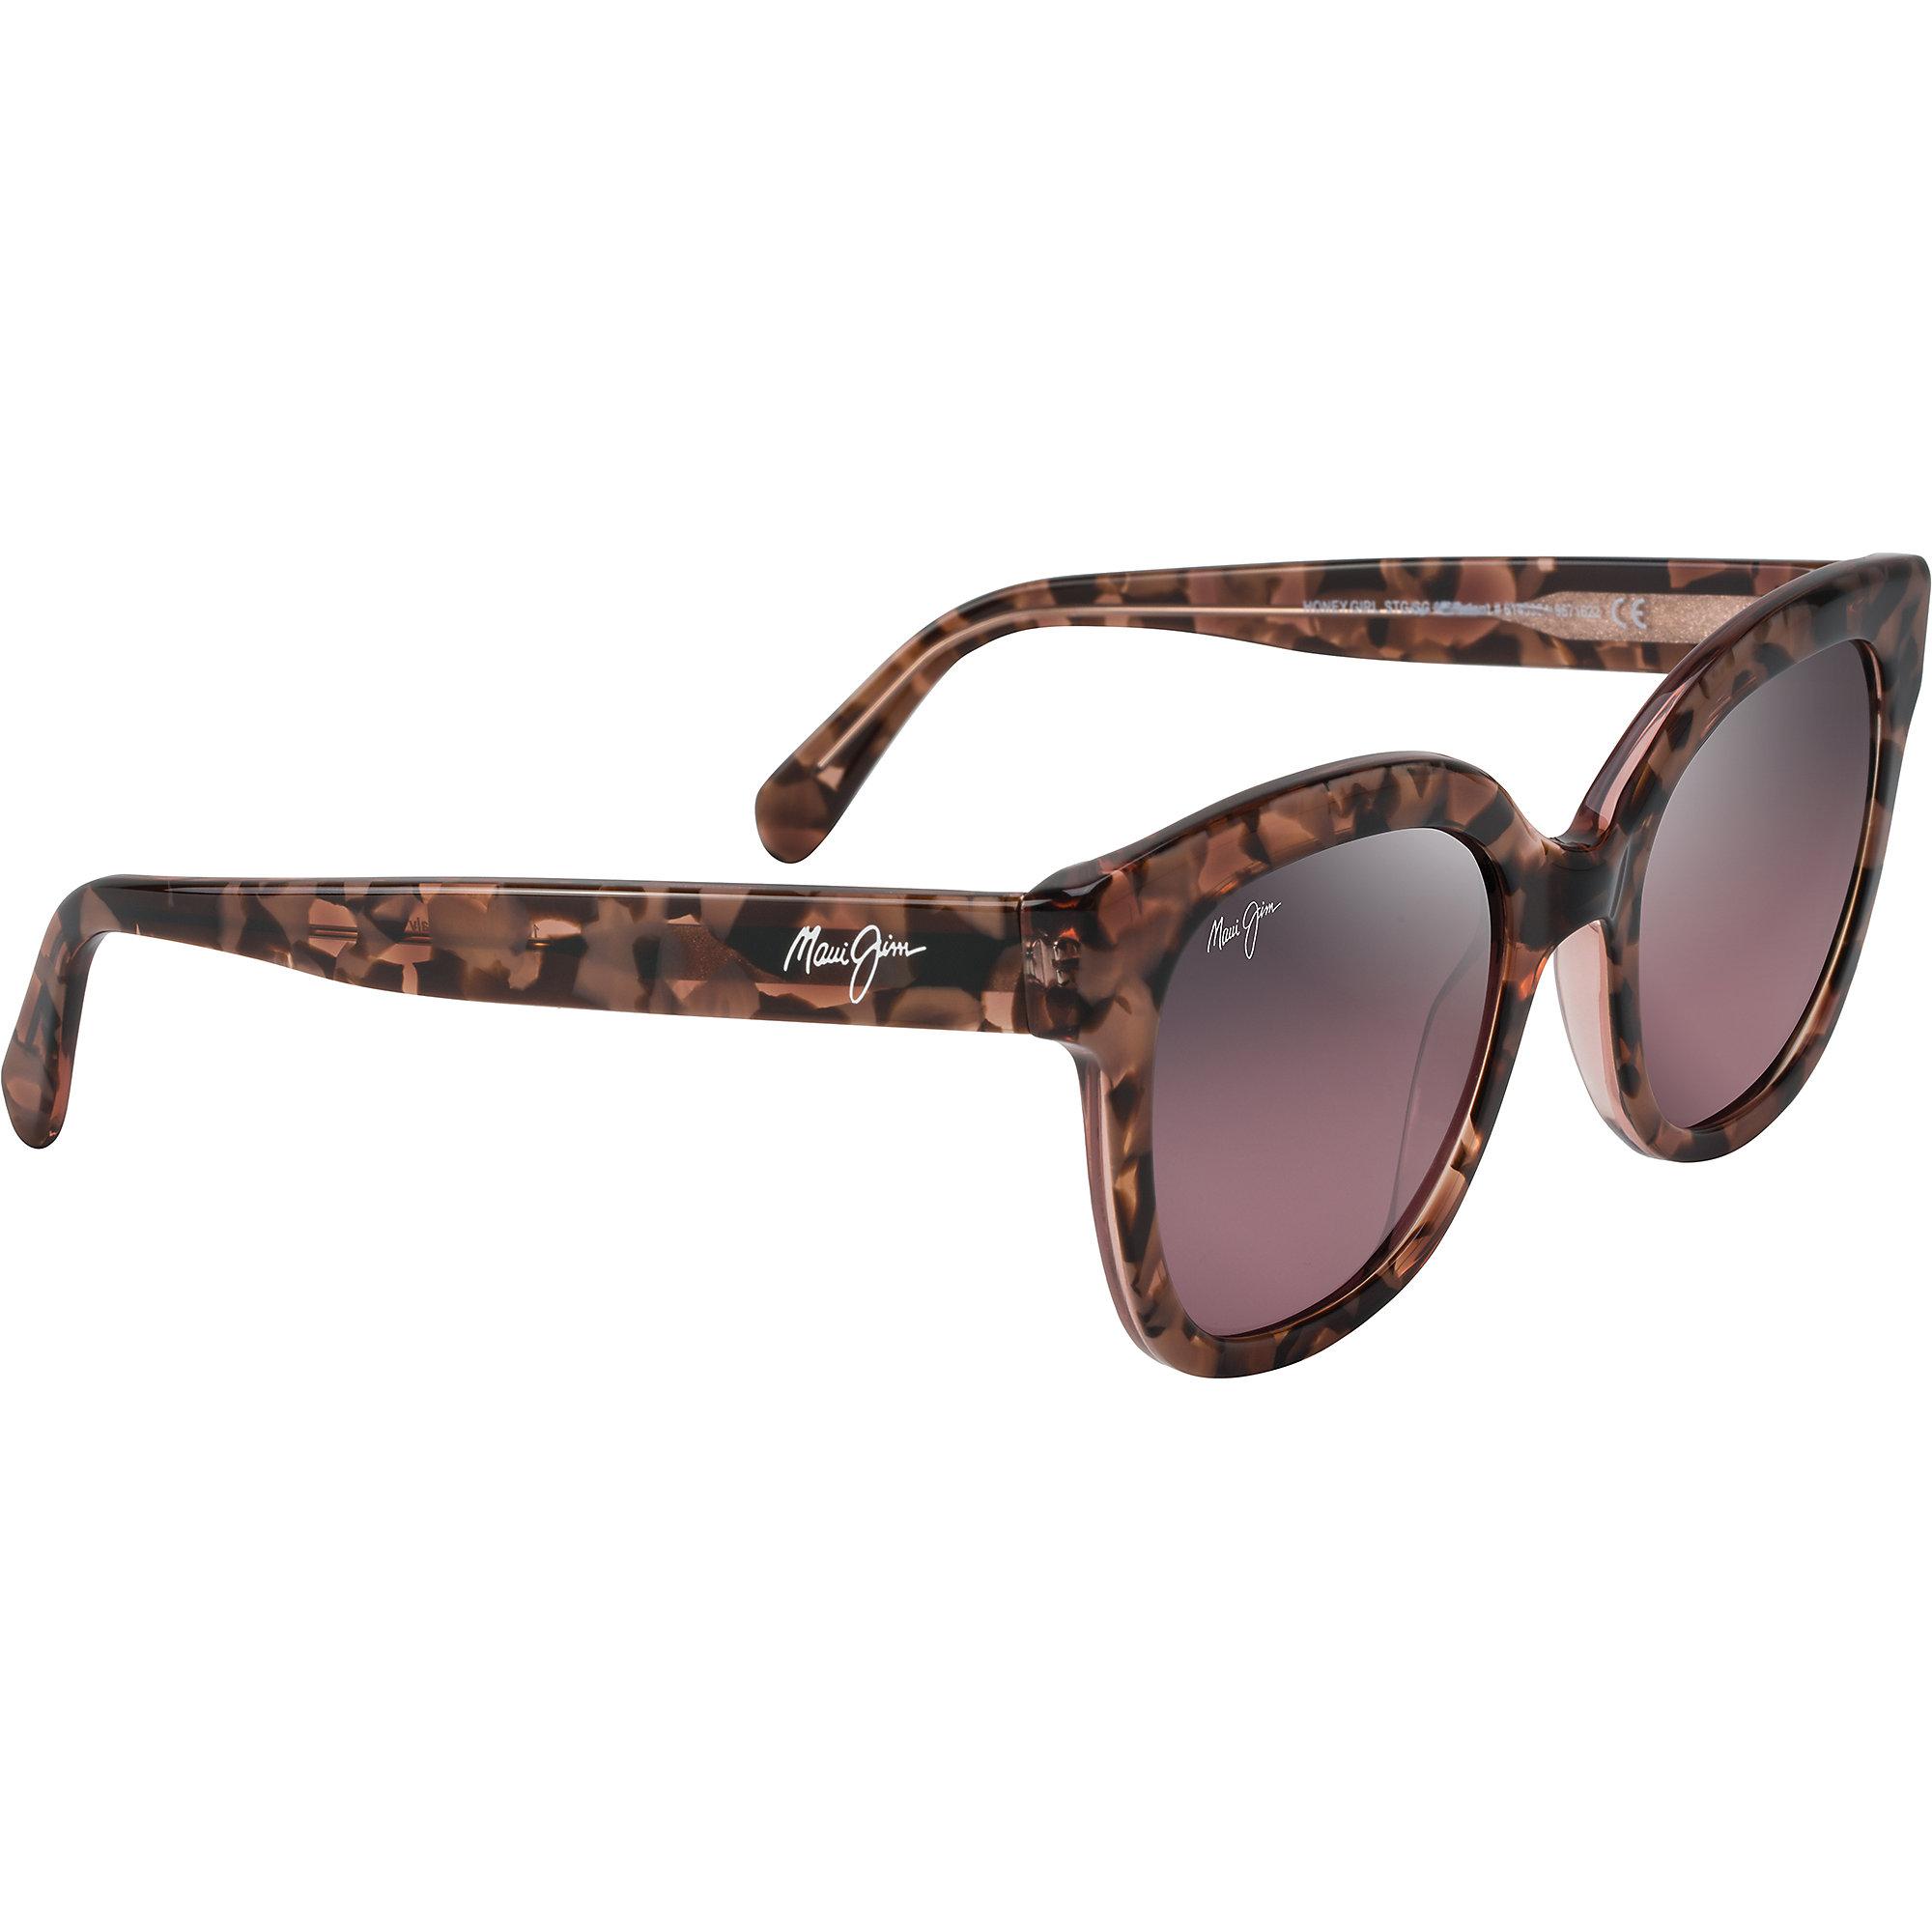 Maui Jim Honey Girl Polarized Sunglasses in Pink - Lyst